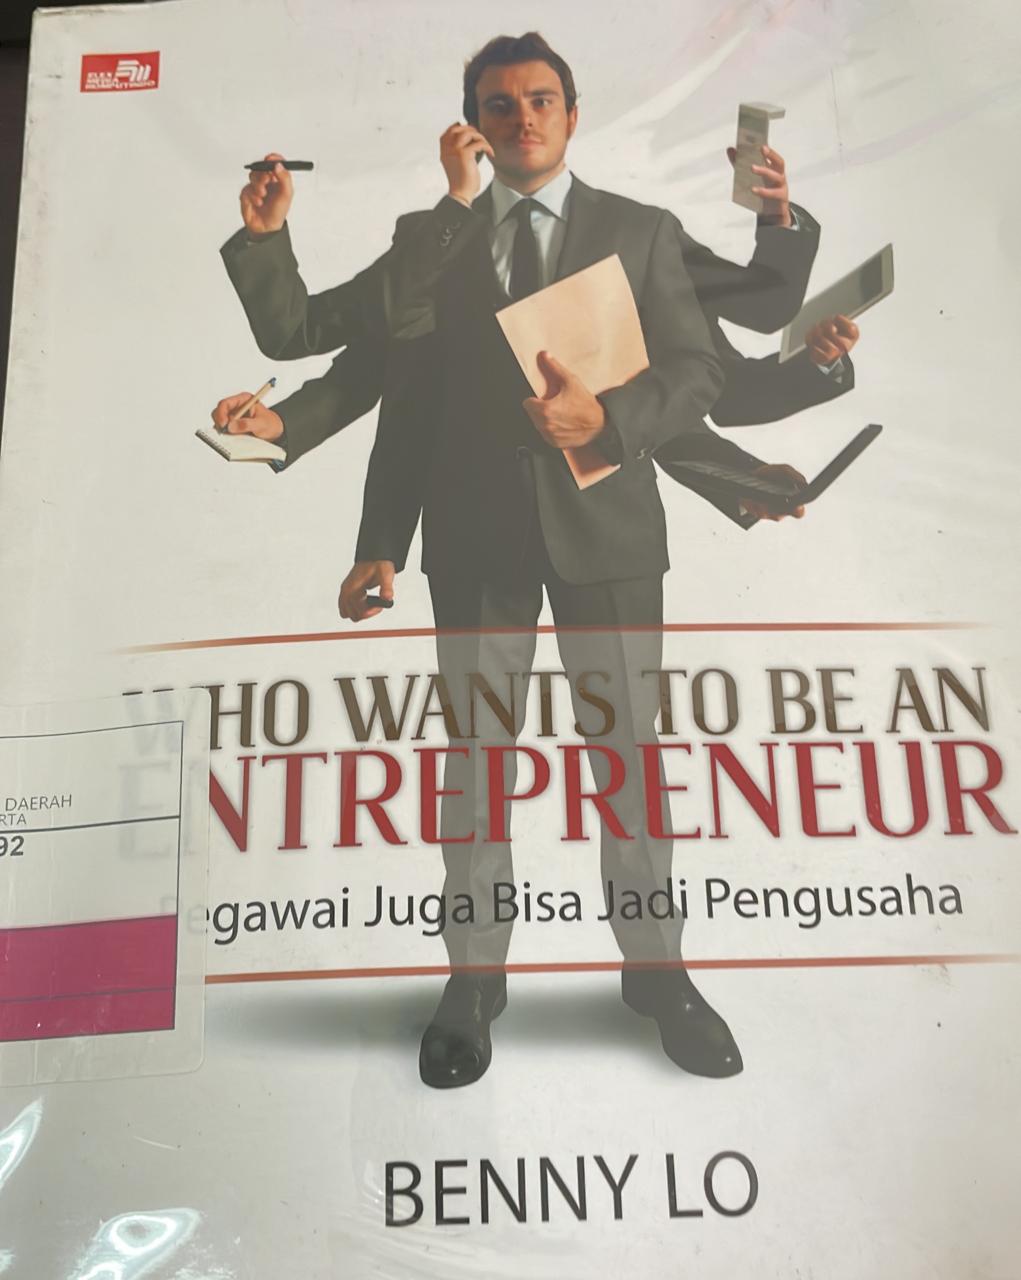 Who wants to be an entrepreneur :  pegawai juga bisa jadi pengusaha